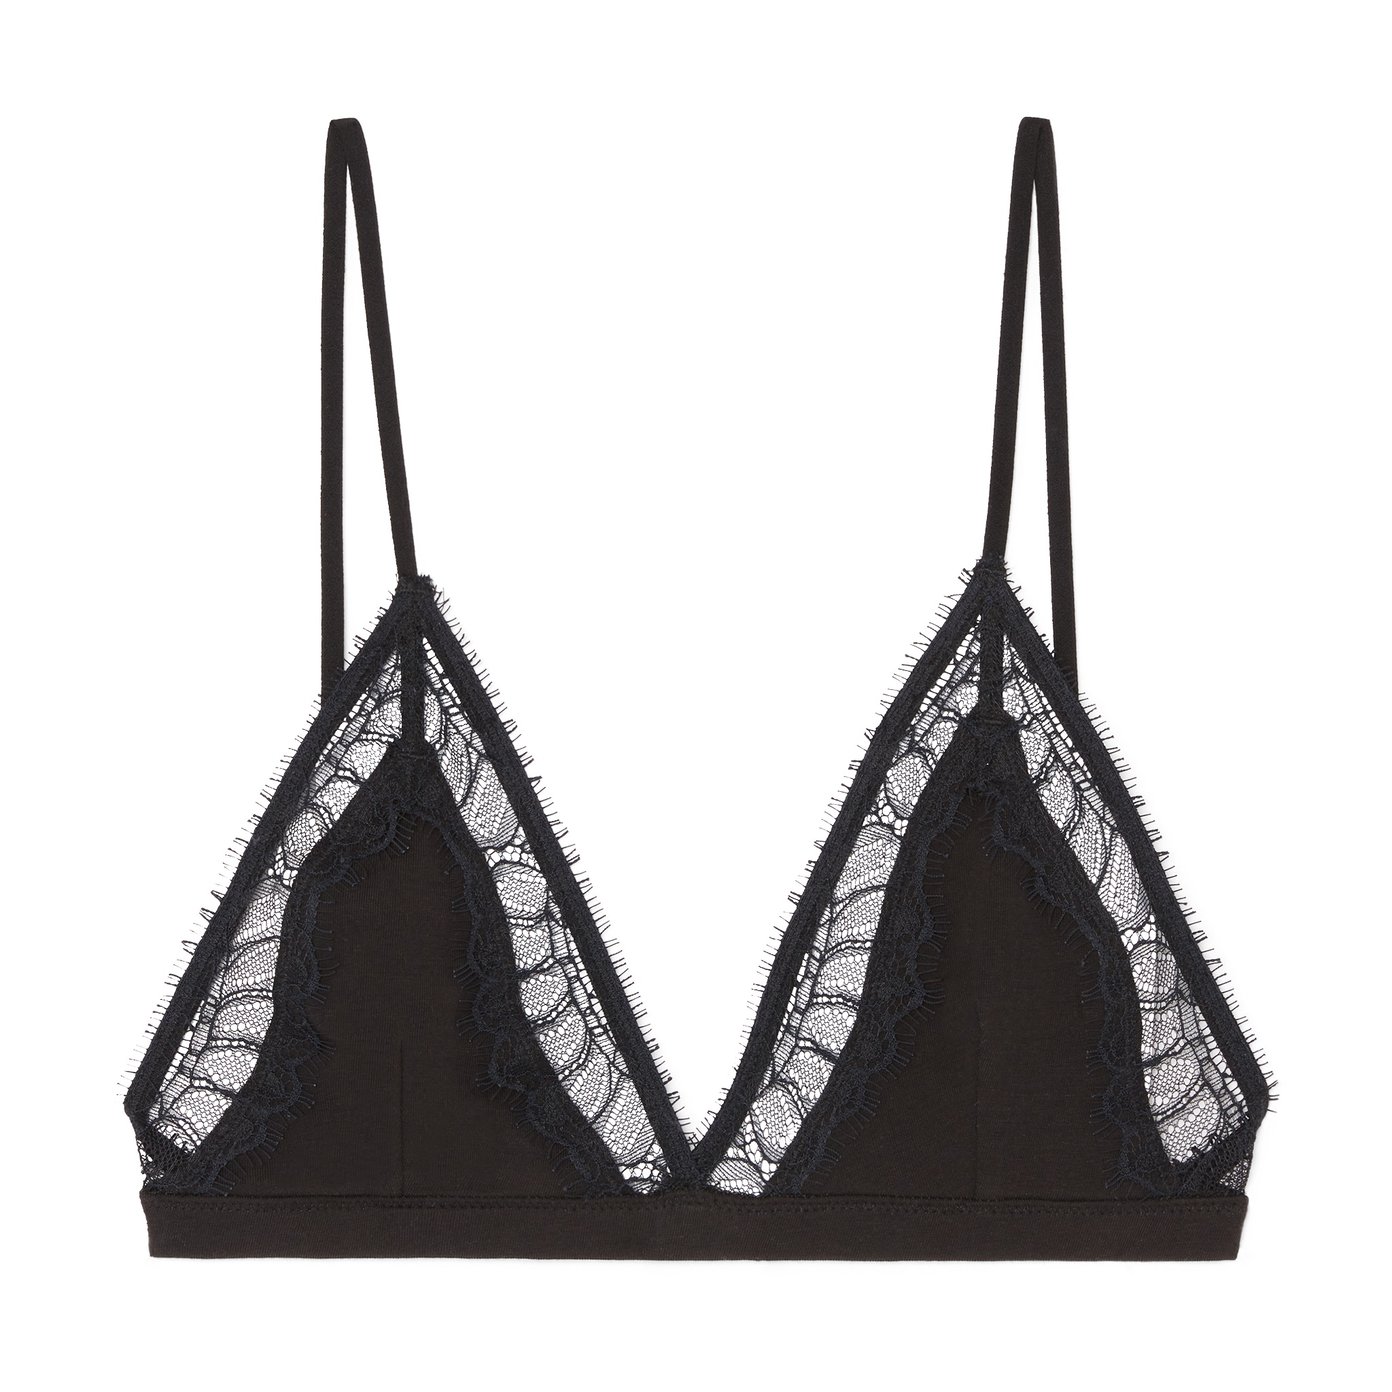 Lace triangle bra in Black for